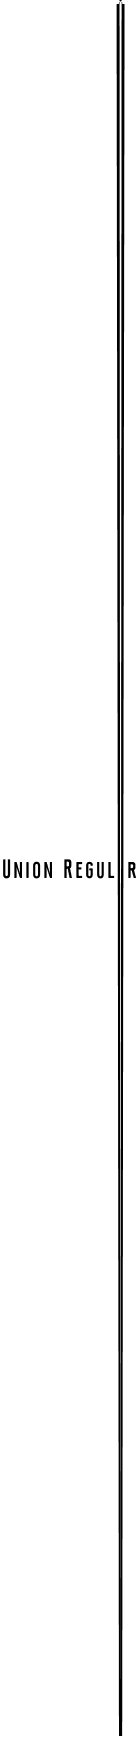 Union Regular font - Union-Regular.otf